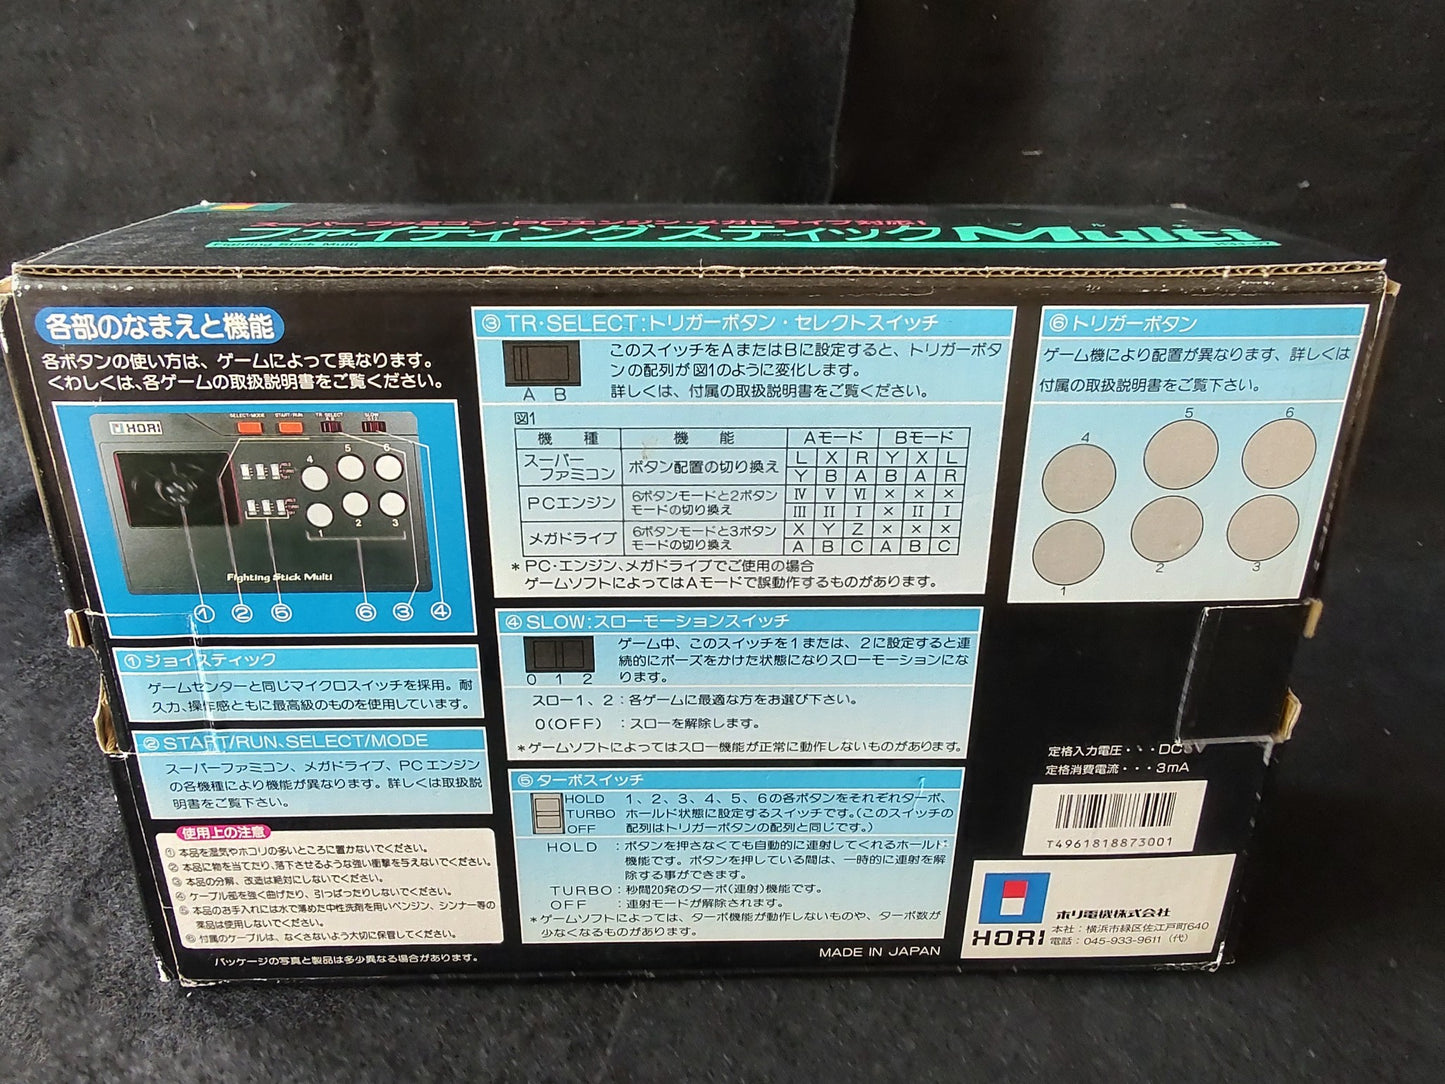 Hori Arcade Fighting Stick Multi for SNES, PC Engine, Megadrive Boxed set-f0730-